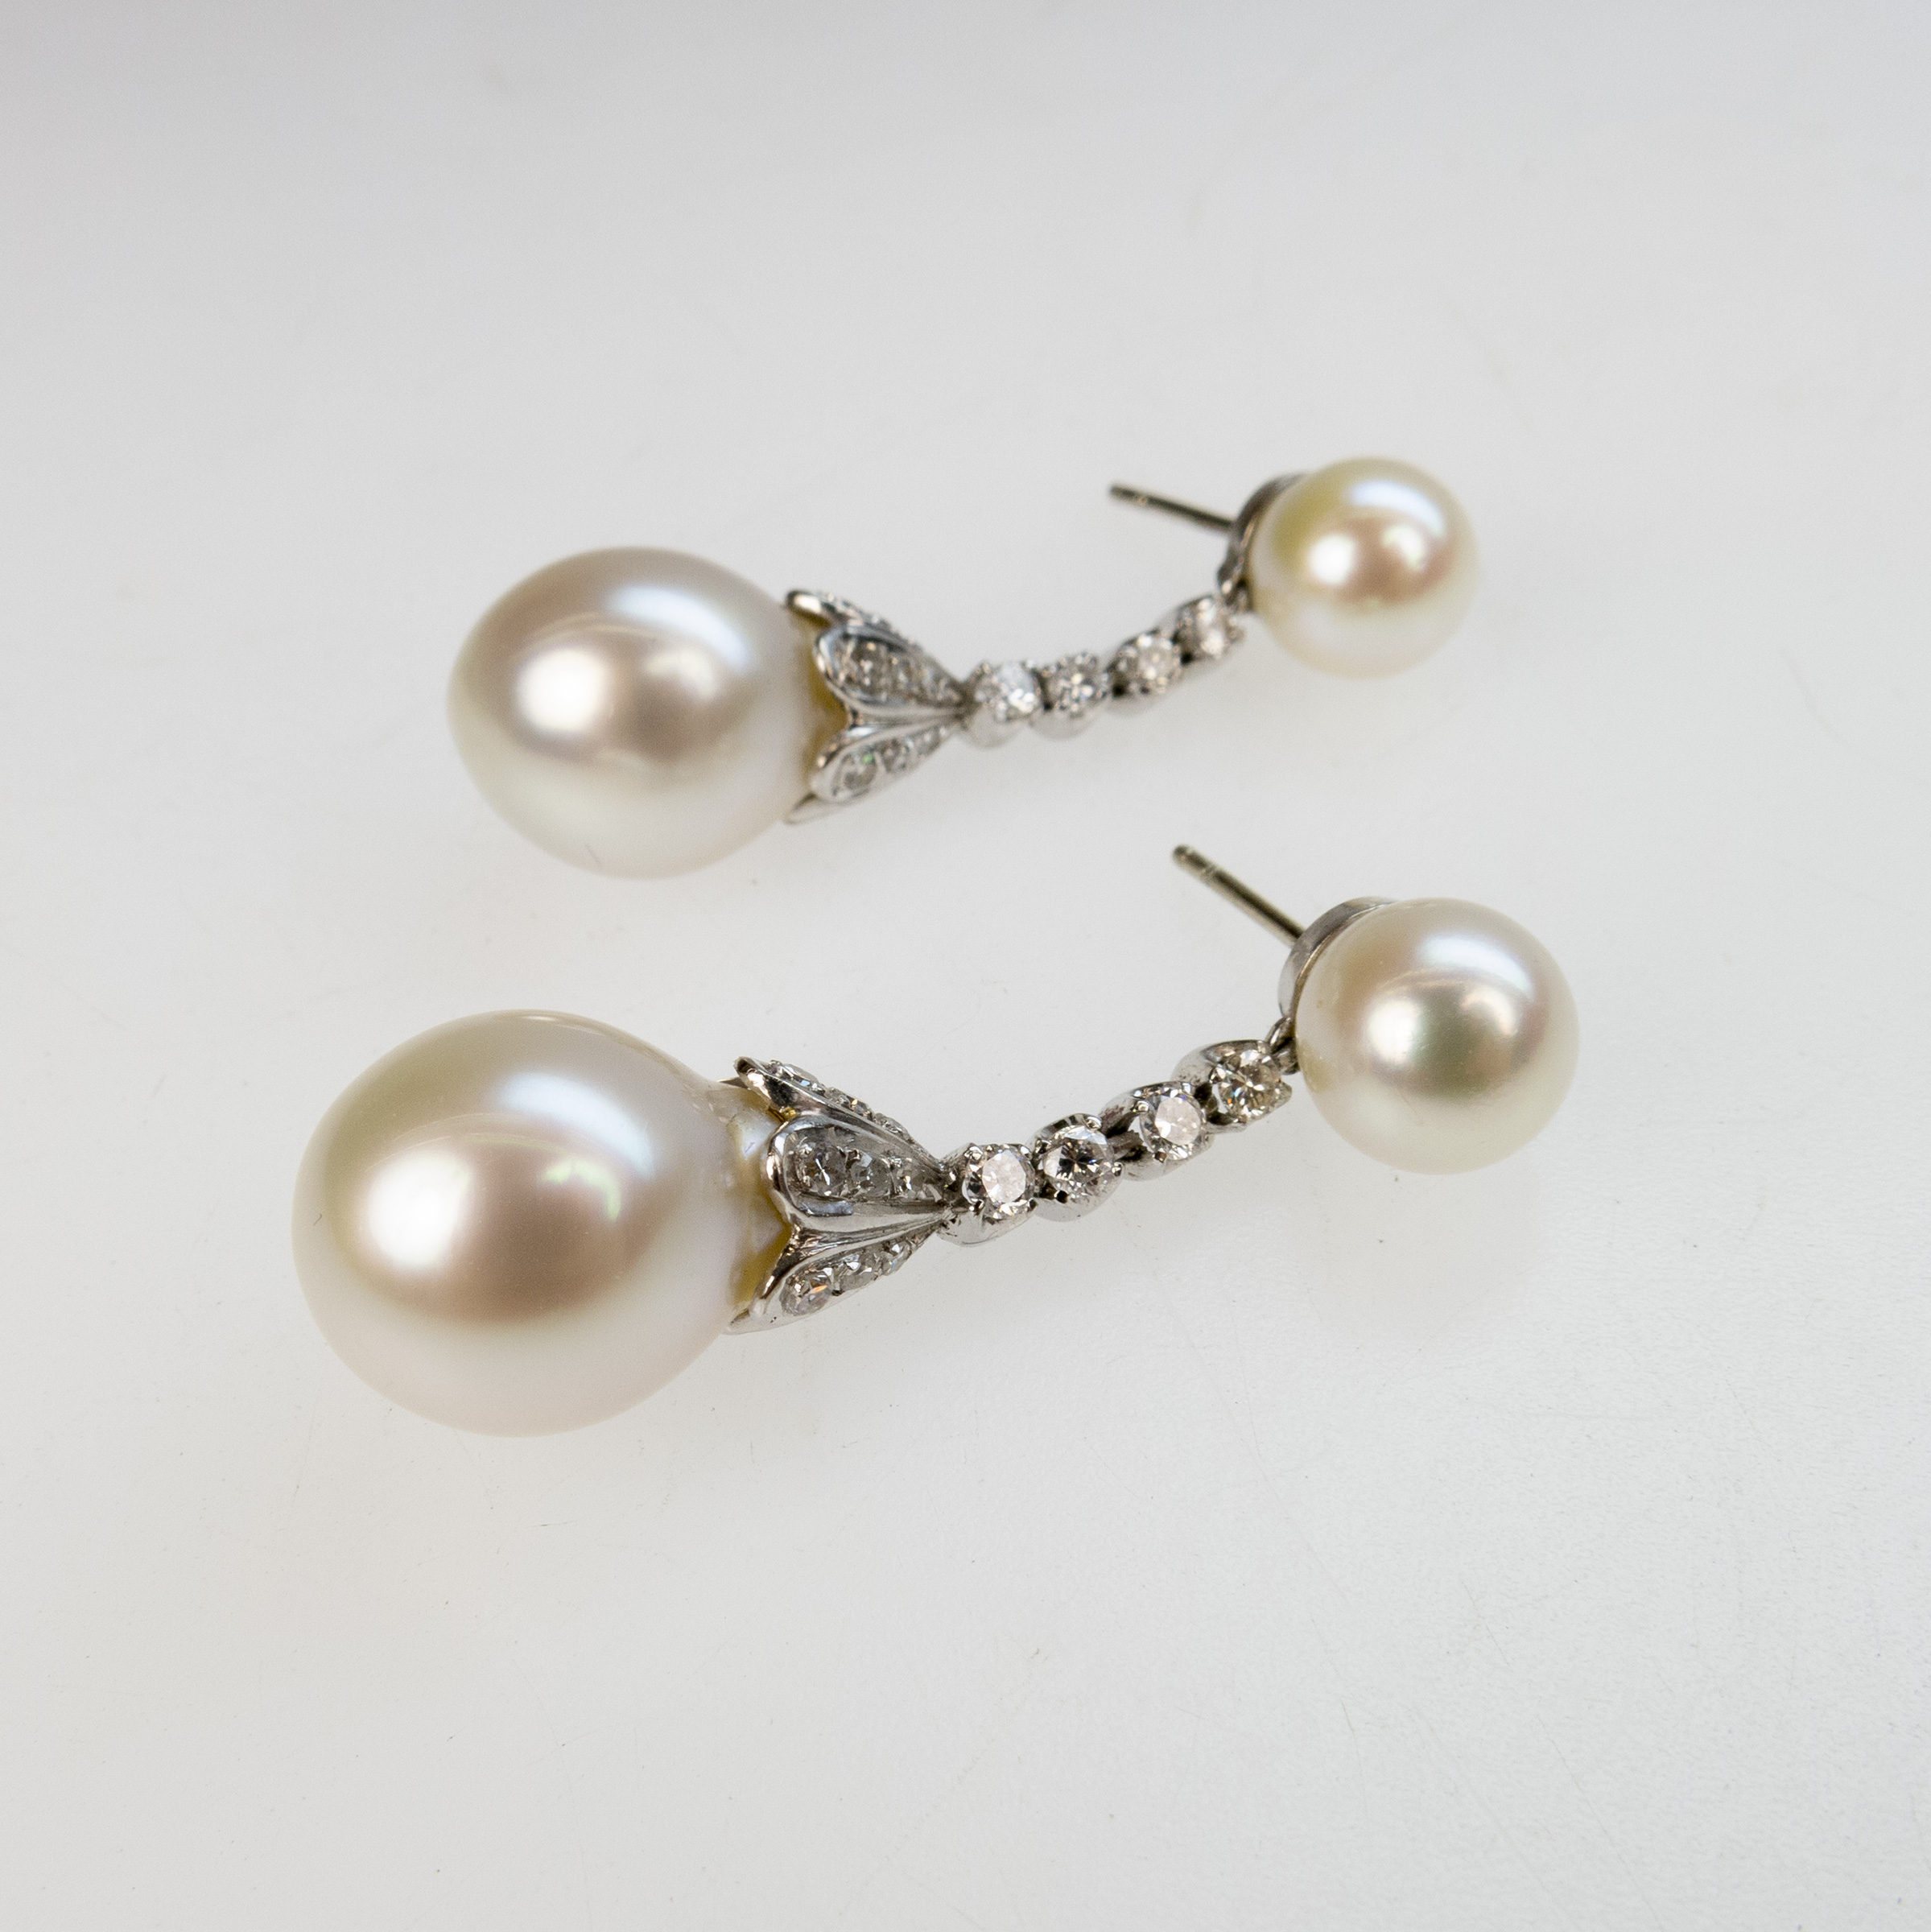 Pair of 14k White Gold Drop Earrings